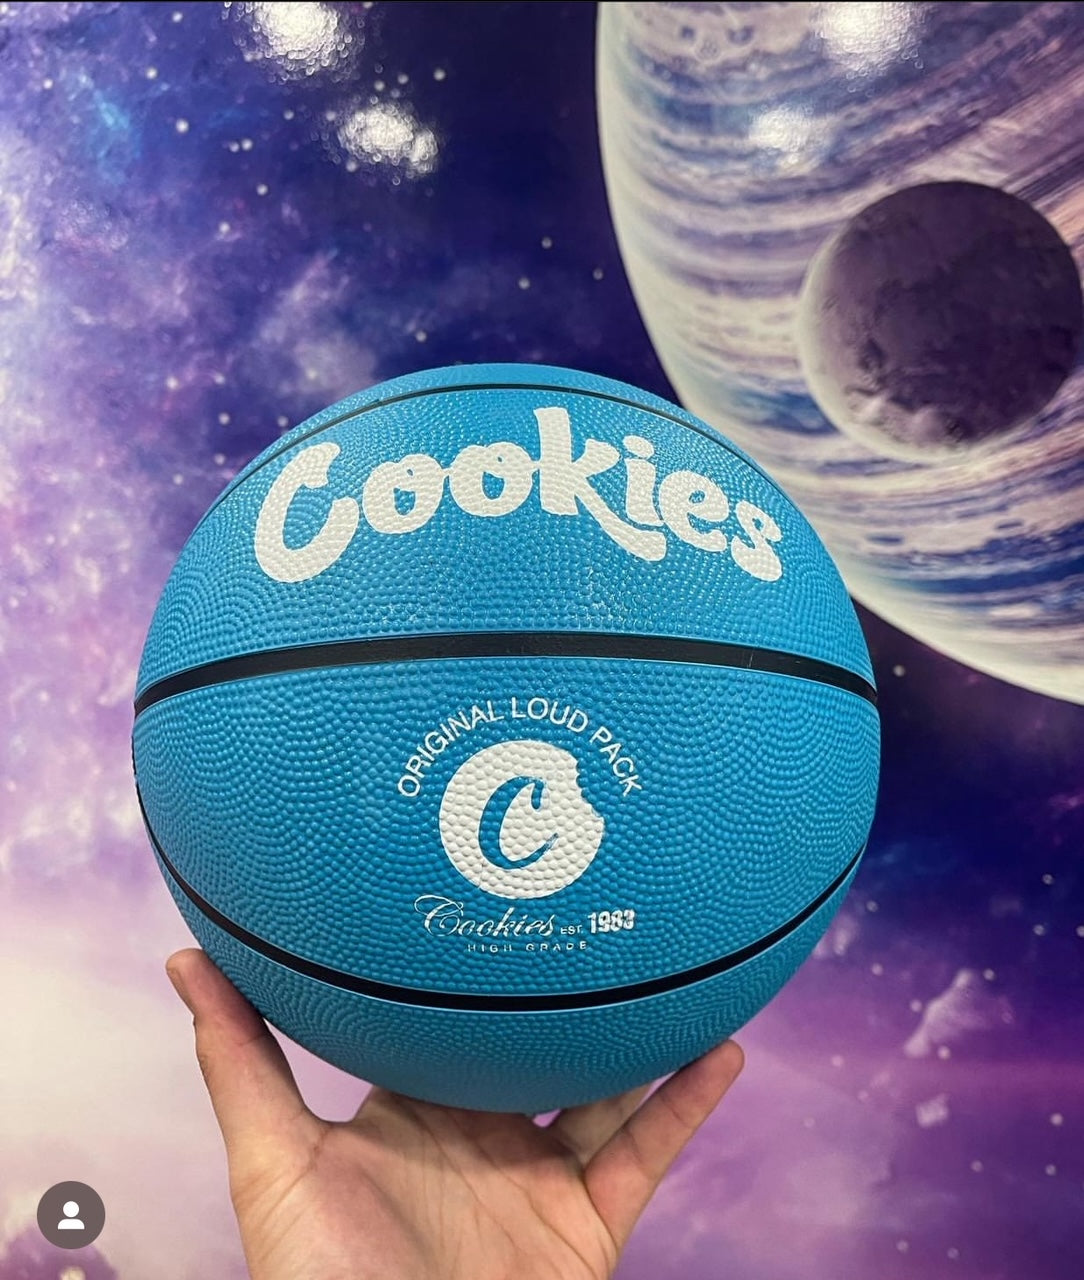 Cookies SF basketball